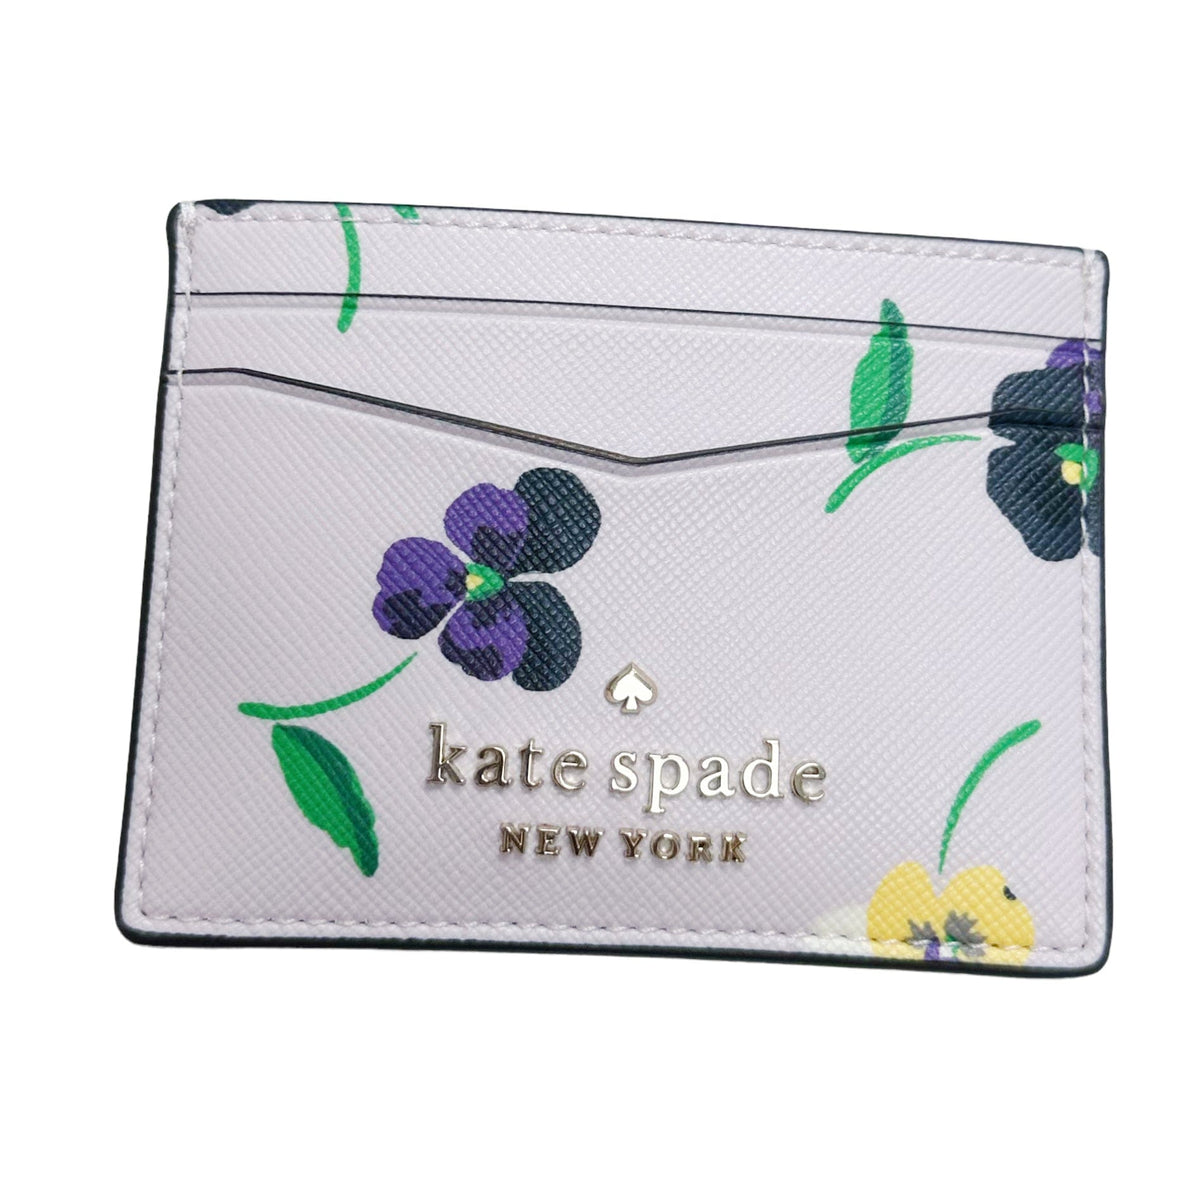 Kate Spade New York Dawn Cameron Pocket Saffiano Leather Tote